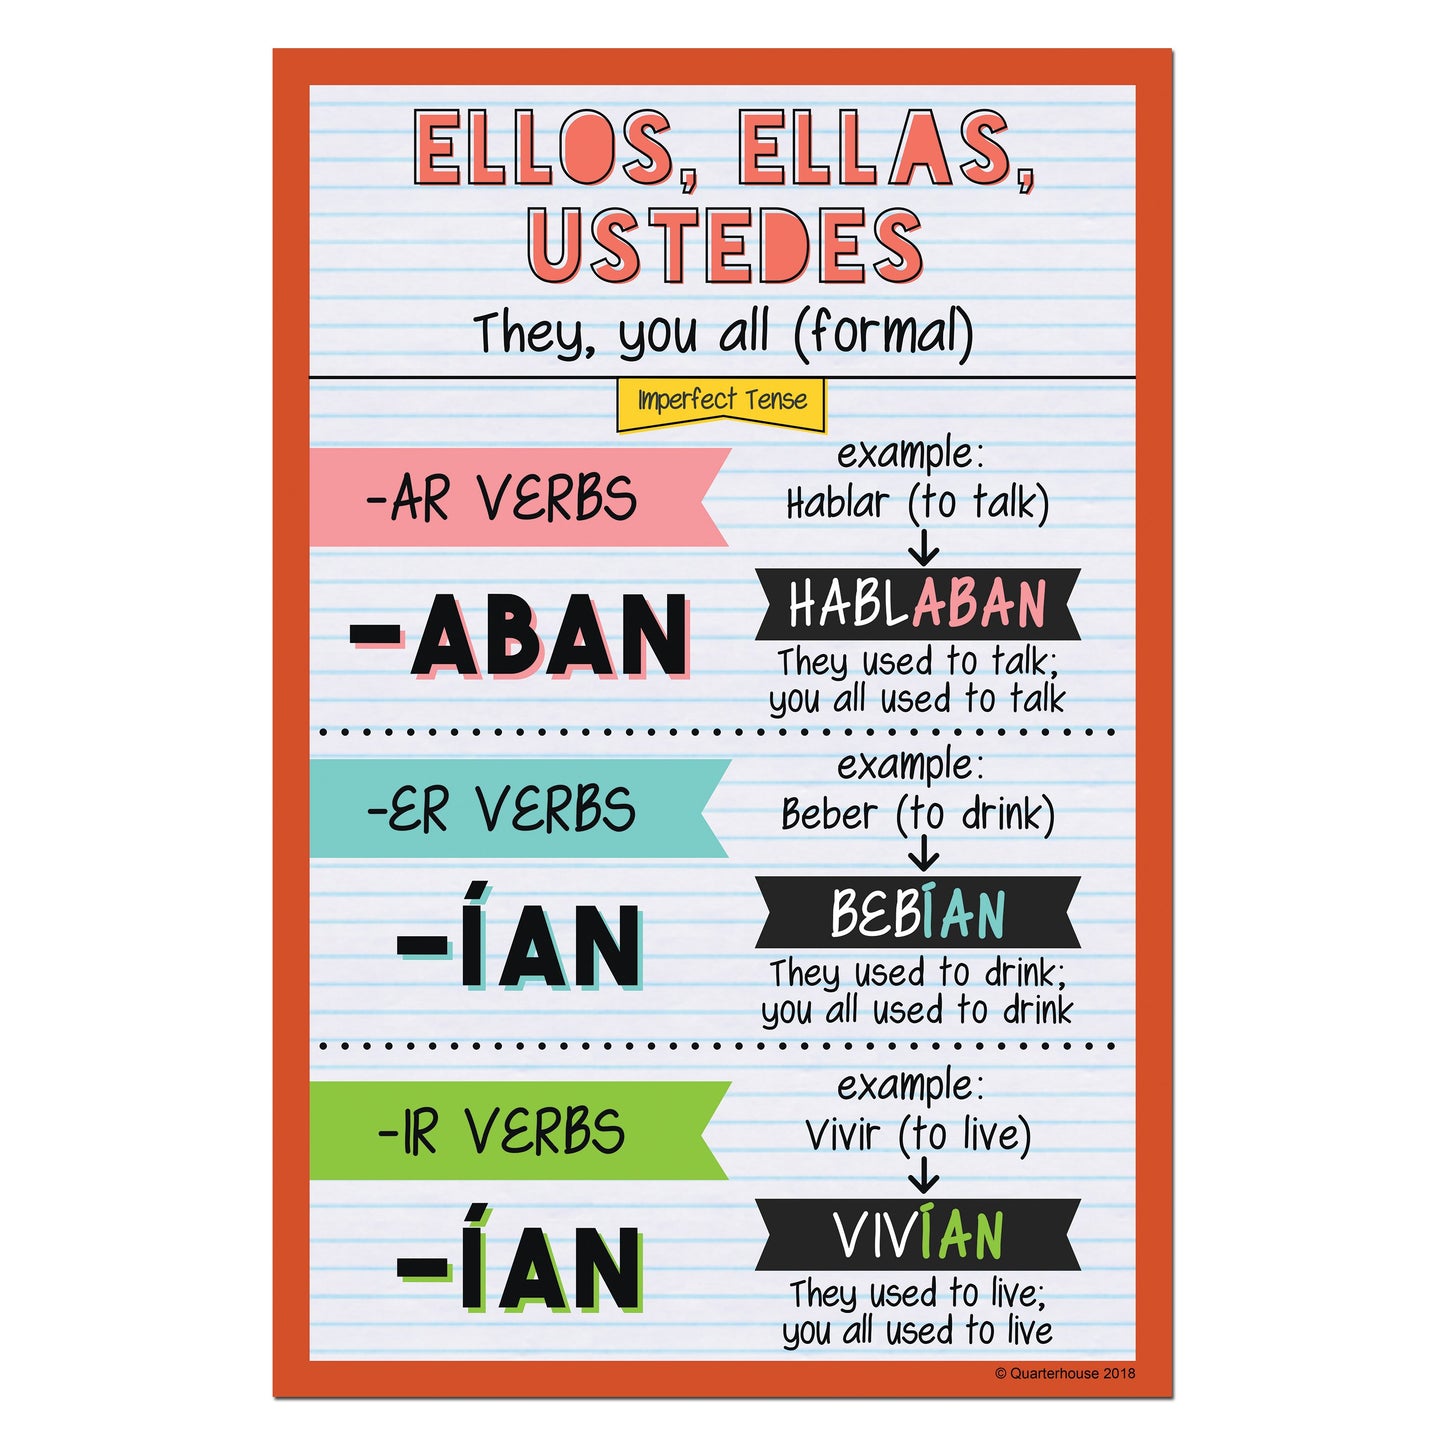 Quarterhouse Ellos, Ellas, Ustedes - Imperfect Tense Spanish Verb Conjugation Poster, Spanish and ESL Classroom Materials for Teachers